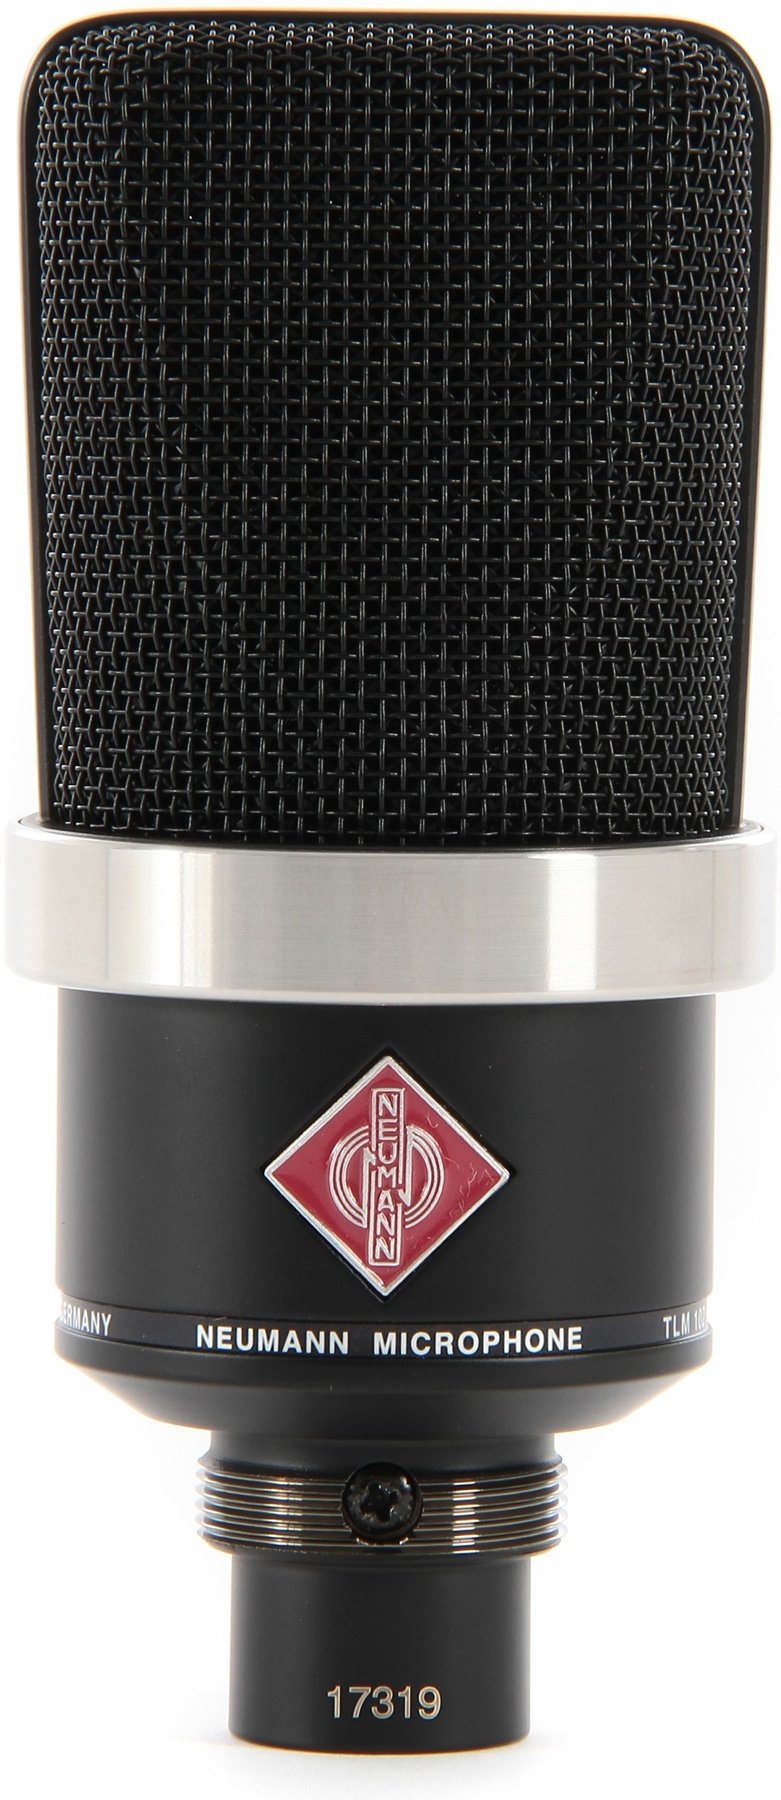 Neumann TLM 102 Cardioid Mic - Black - Microphones - Professional Audio Design, Inc